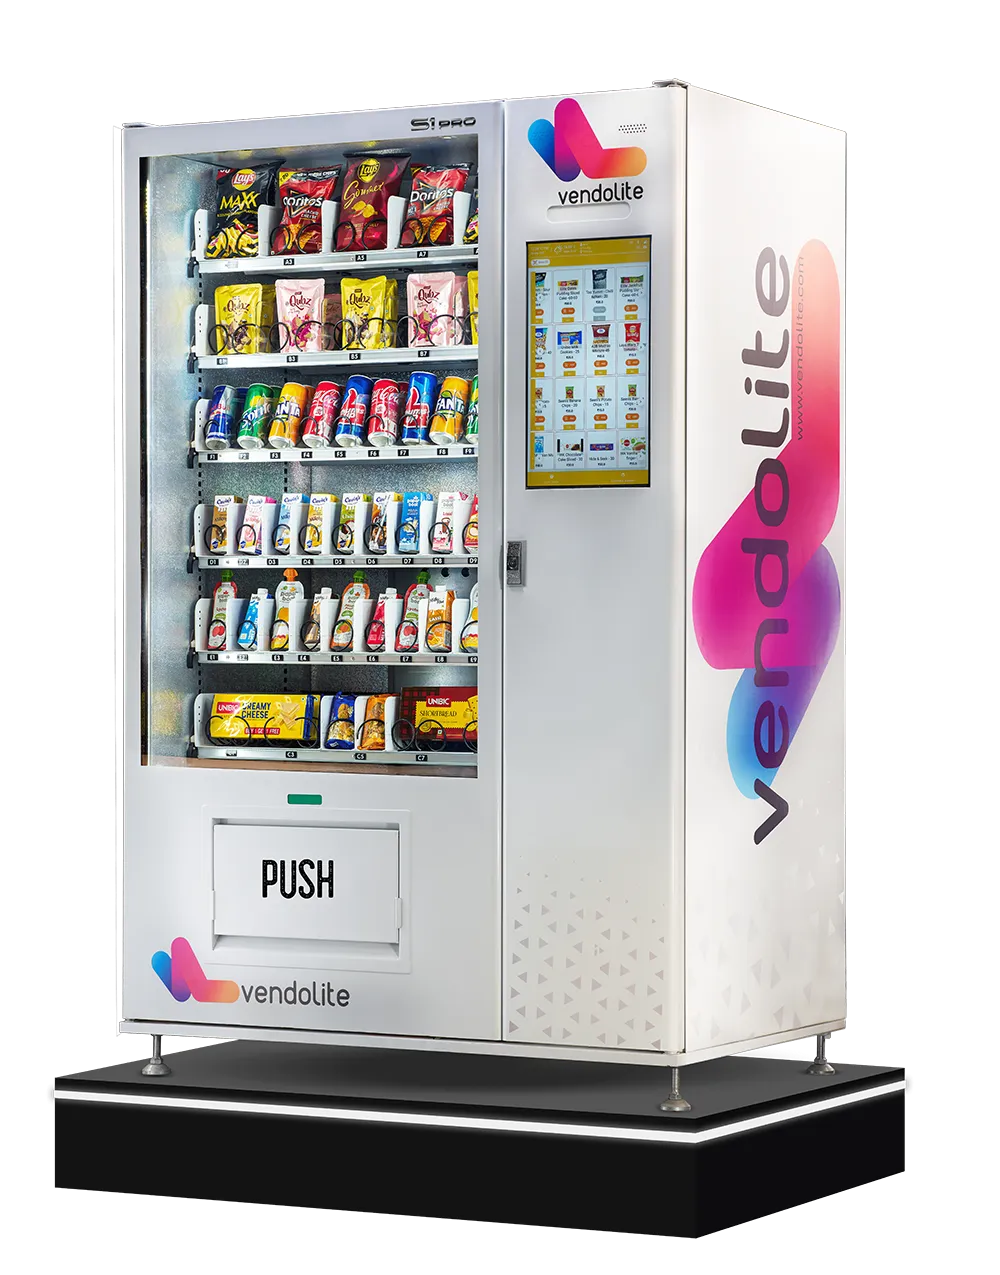 S1 Pro vending machine